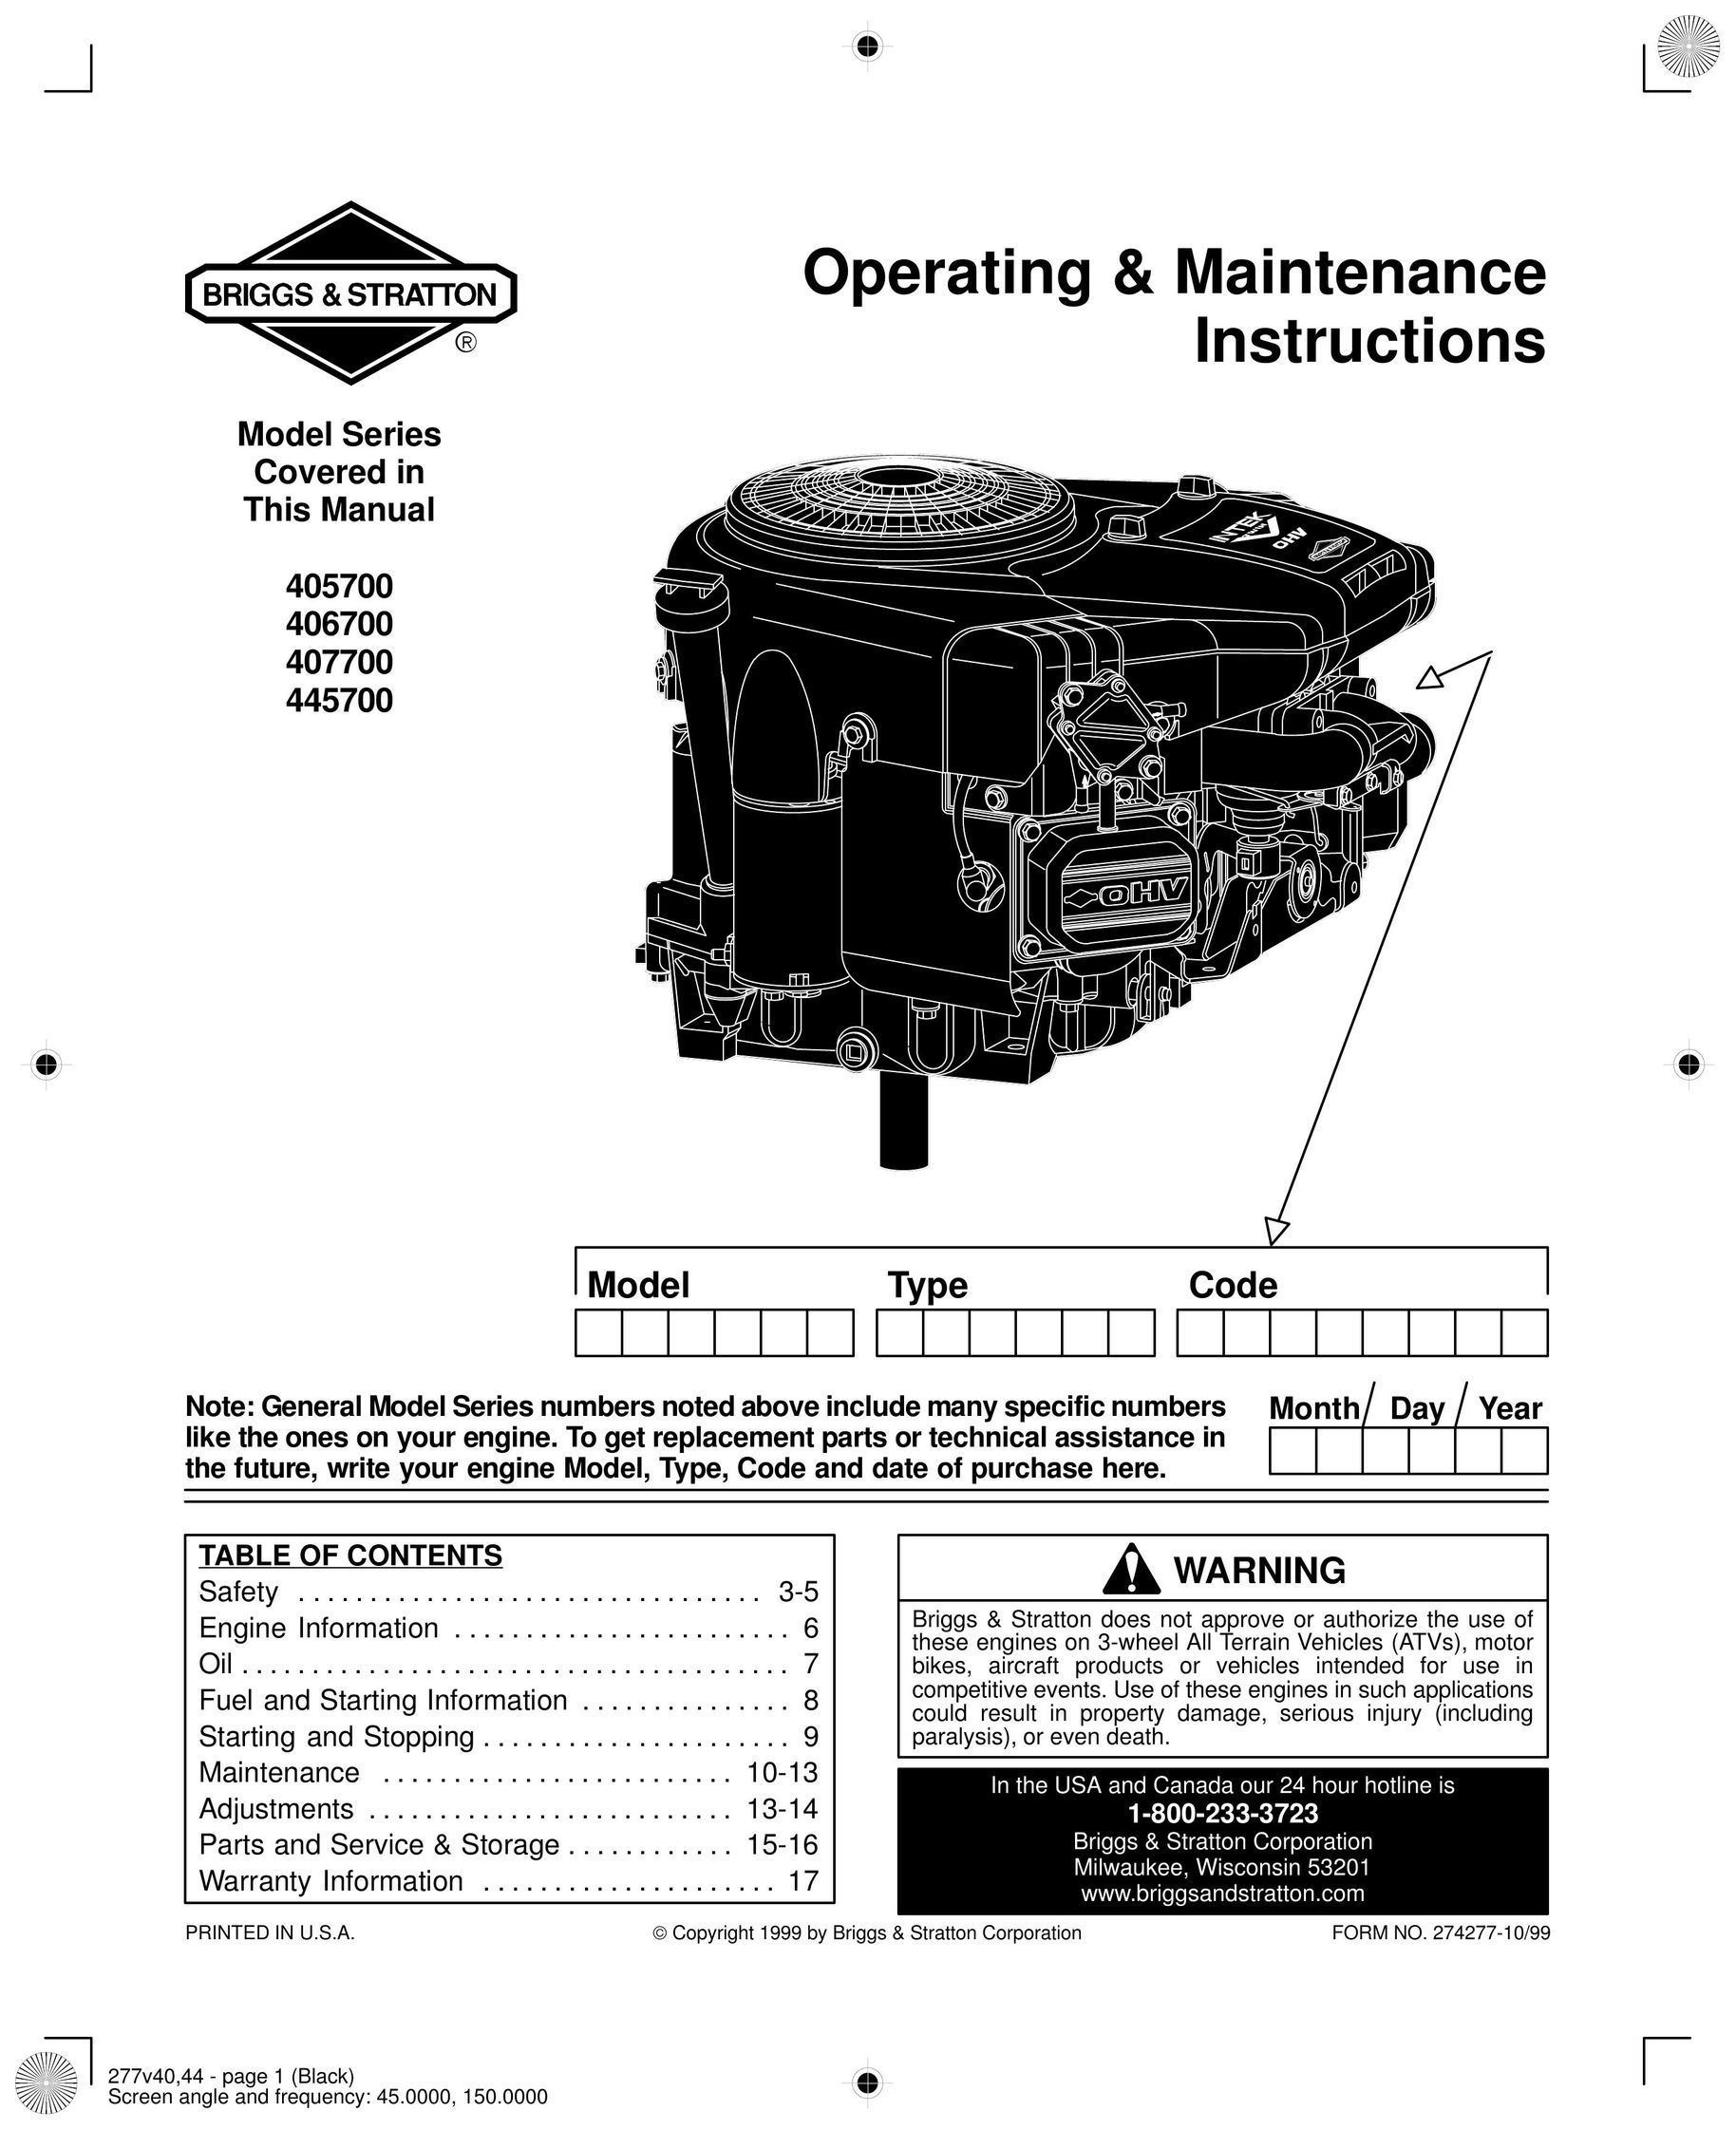 Briggs & Stratton 407700 Air Cleaner User Manual